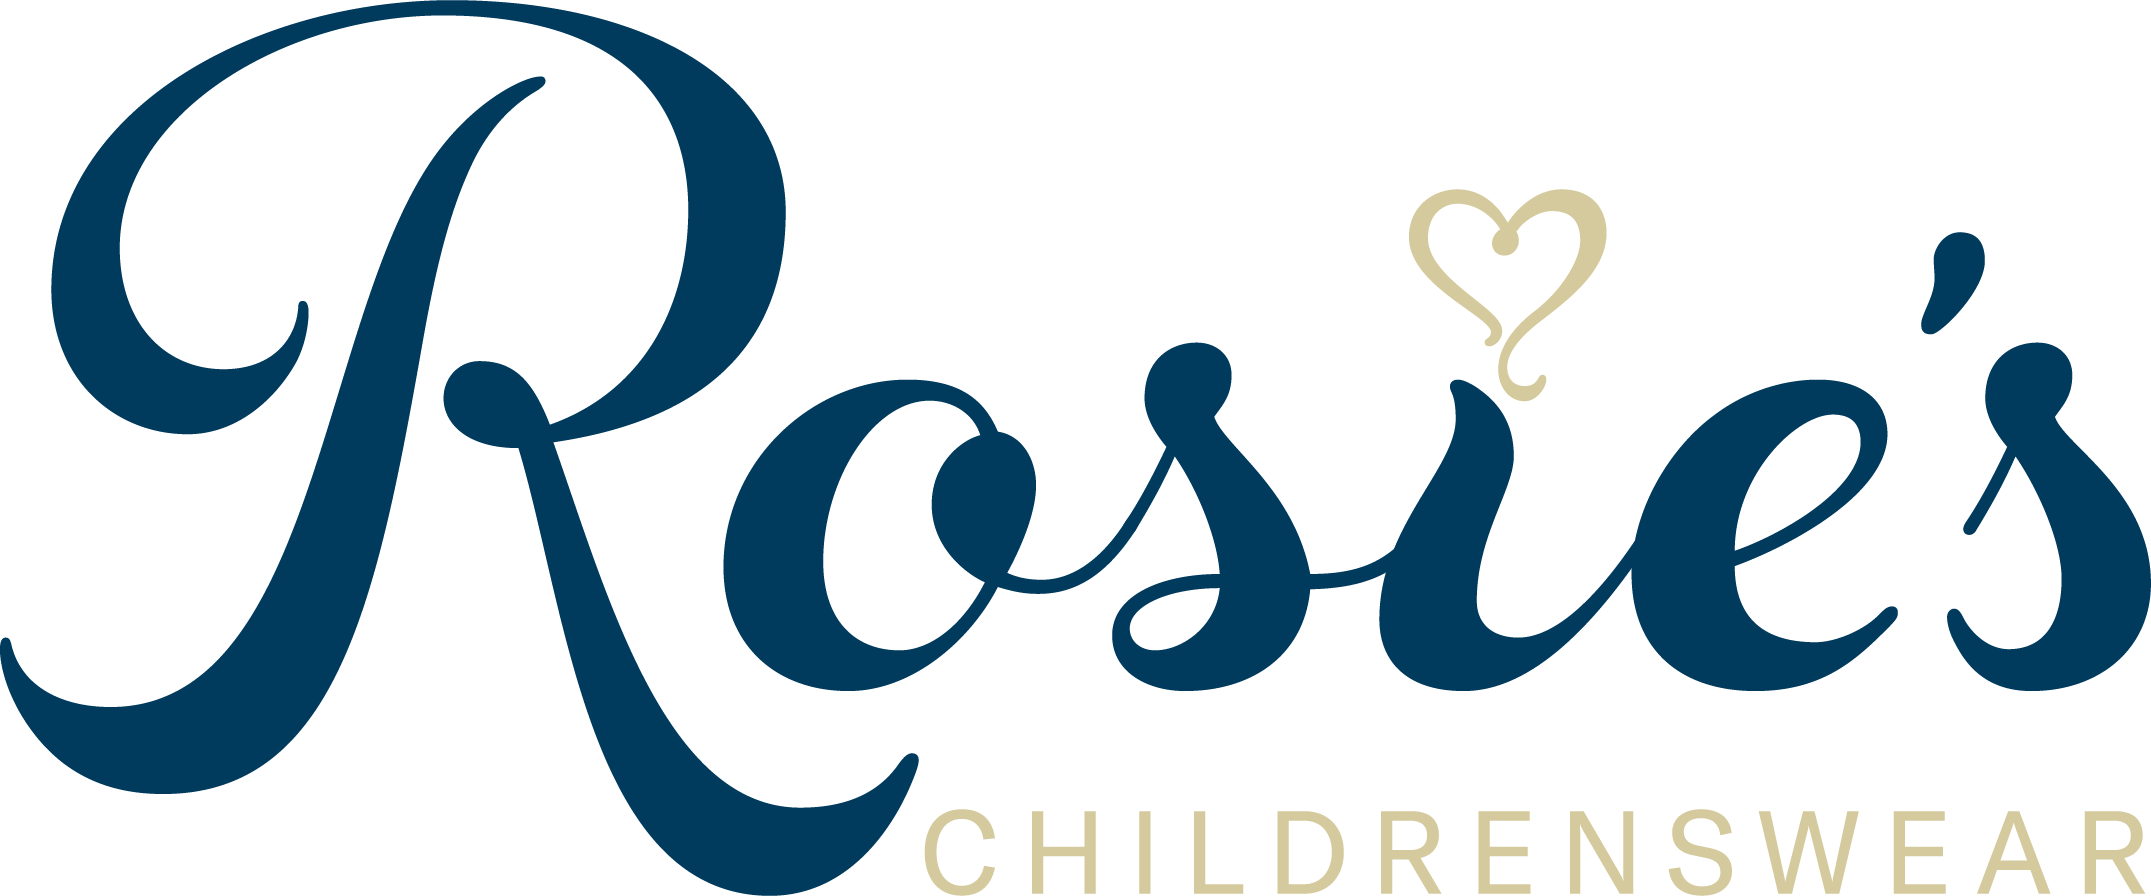 Rosies Childrenswear Logo_2colours